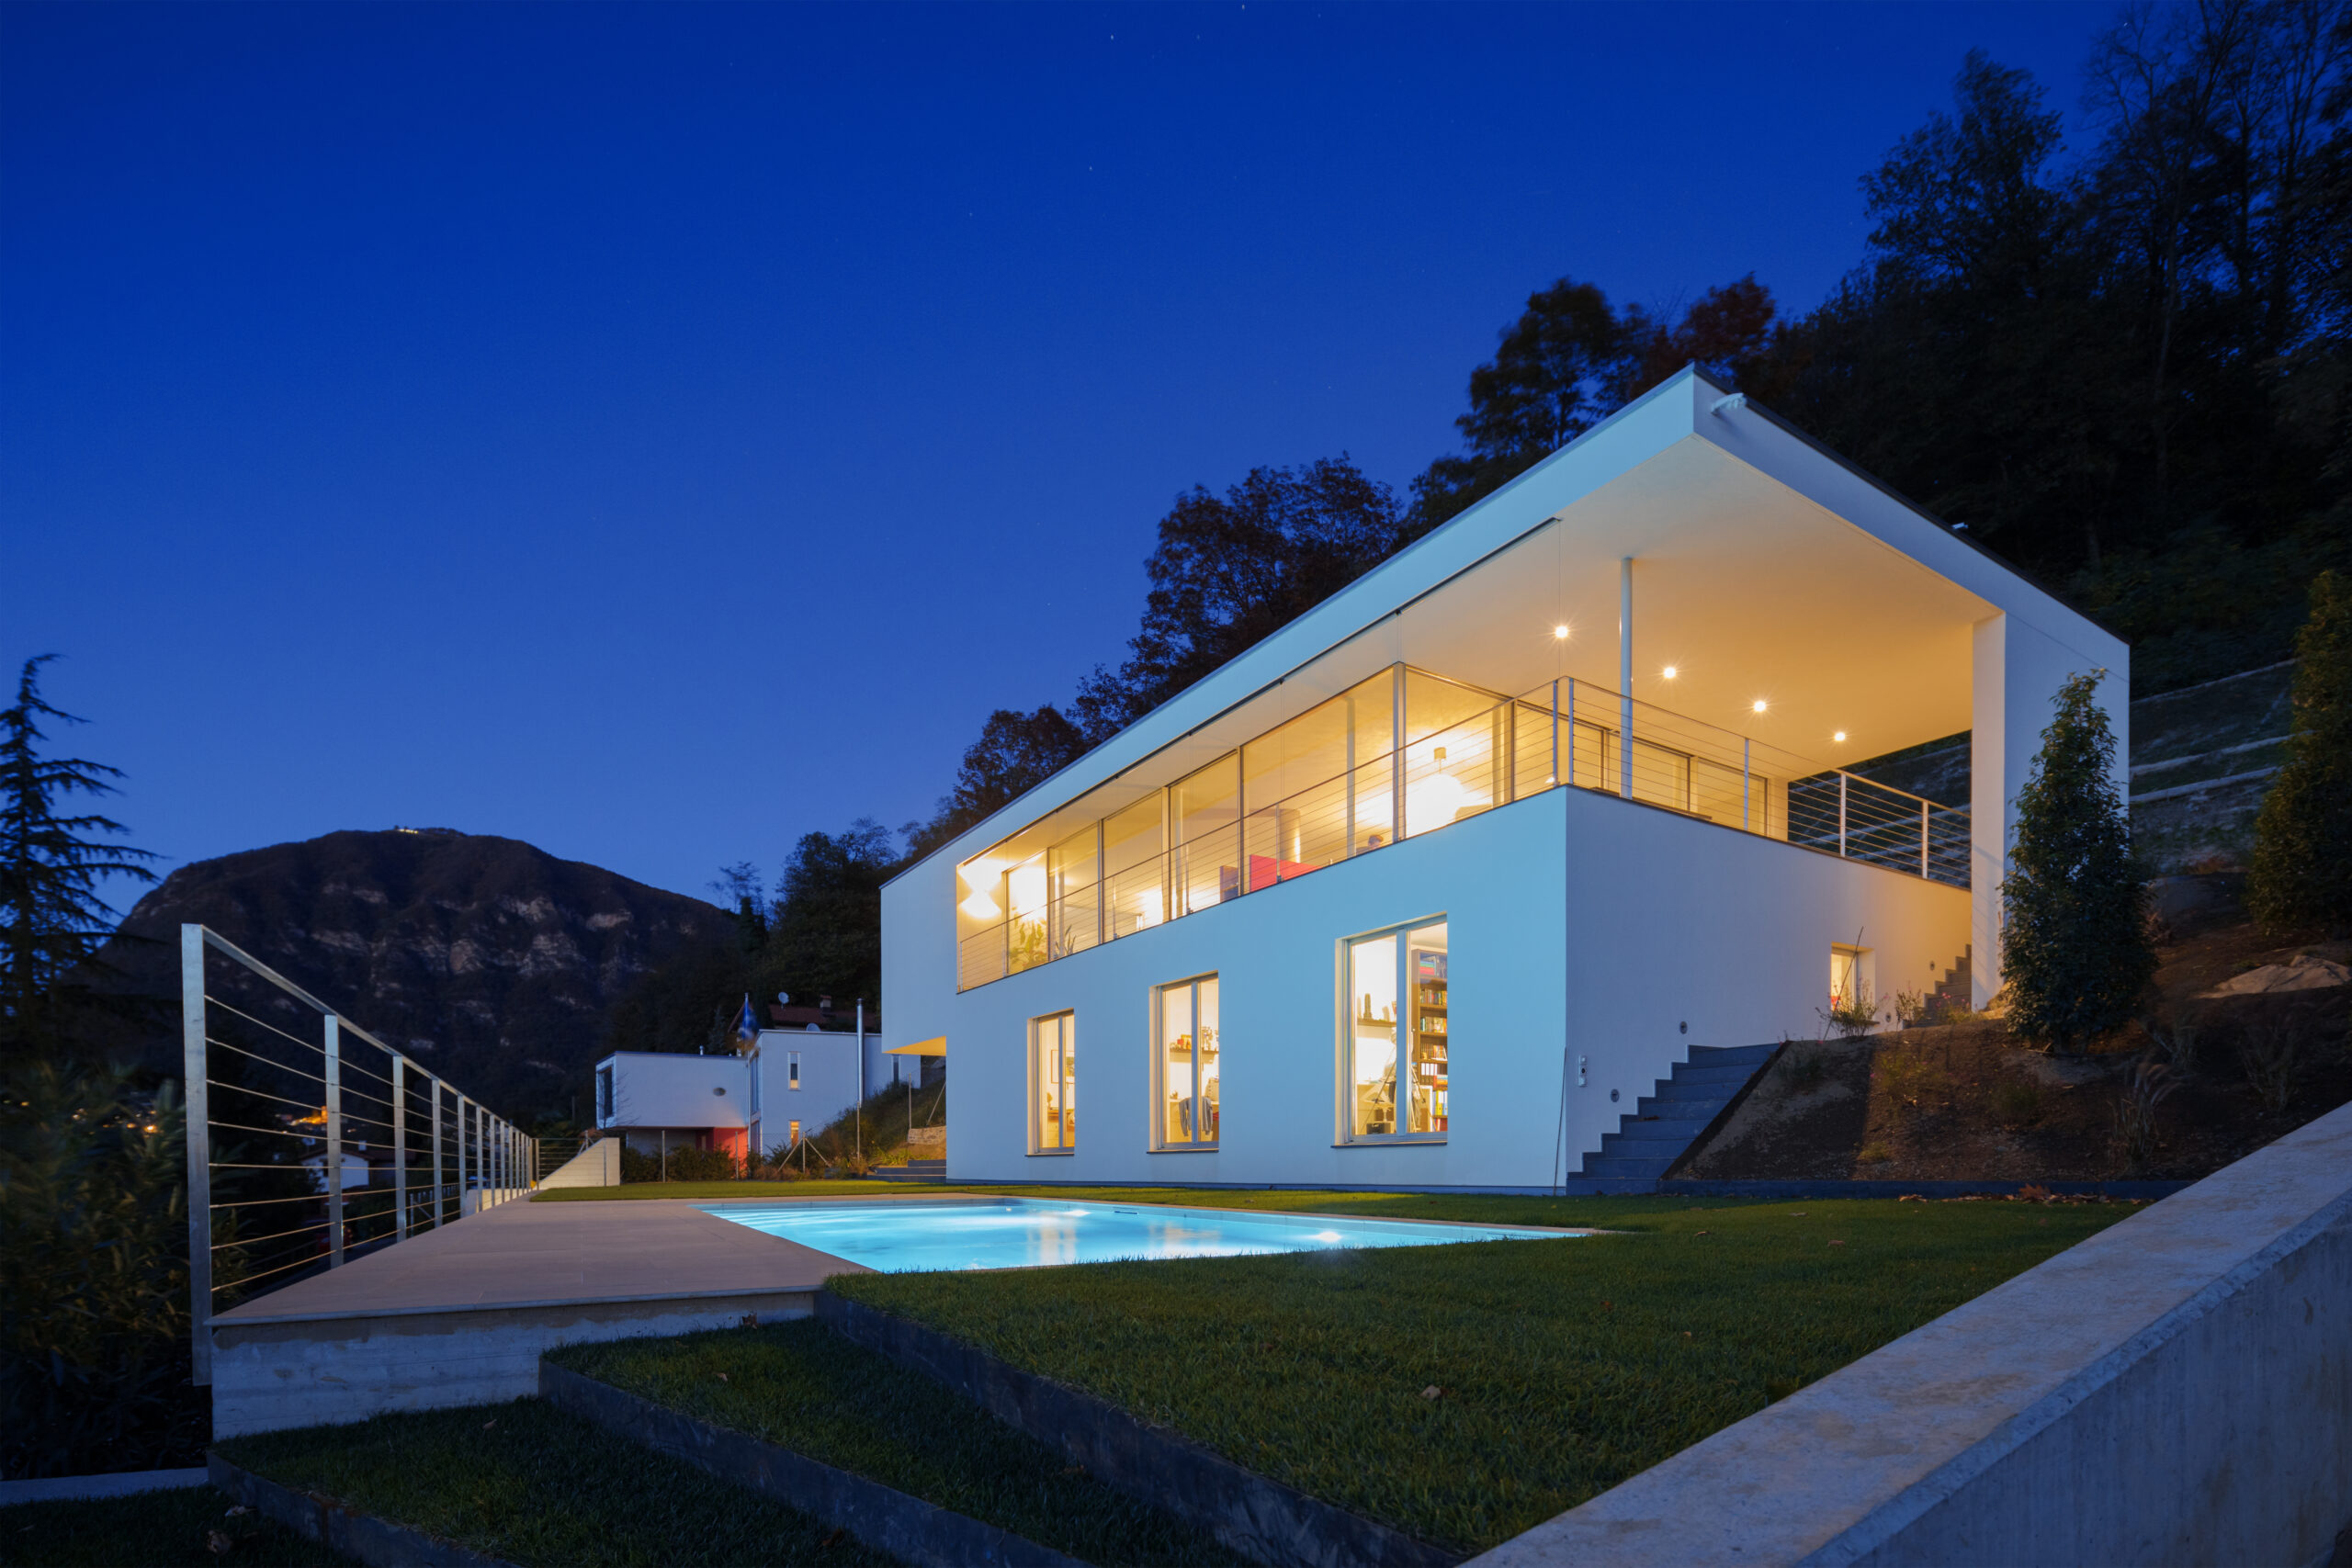 Modern villa, exterior in the night, lights on